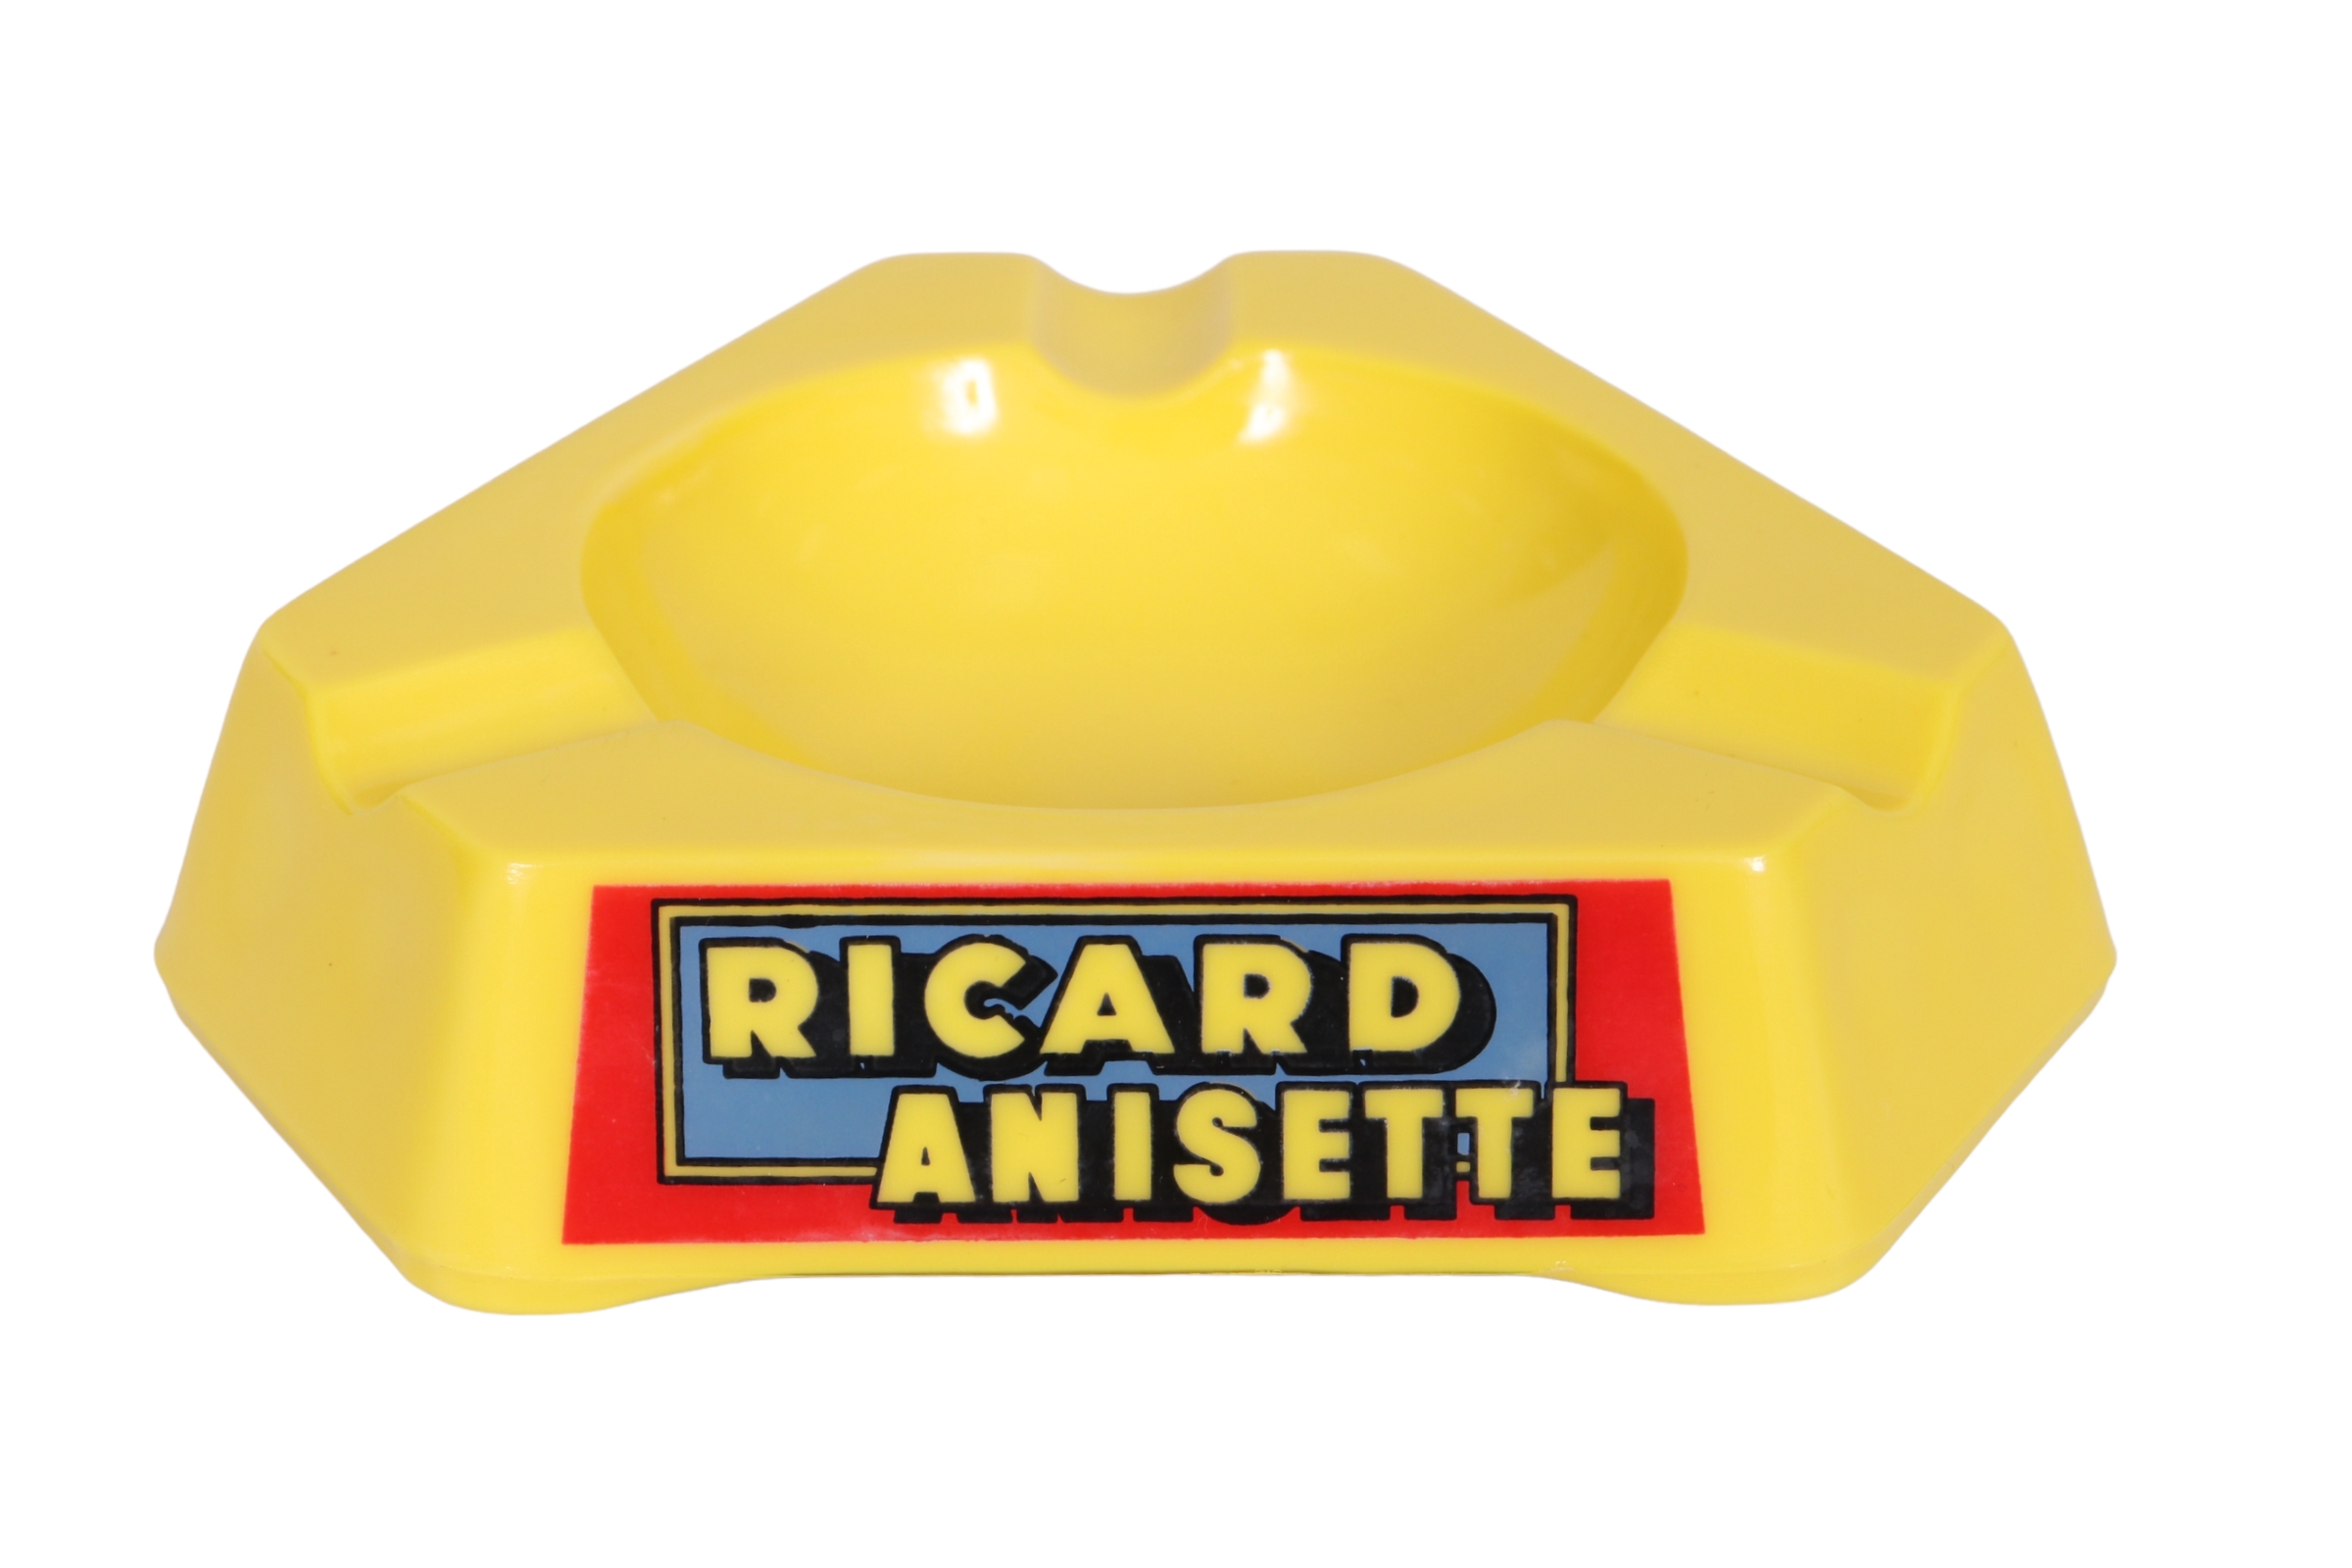 Ricard Anisette French Opalex Ashtray~P77666521